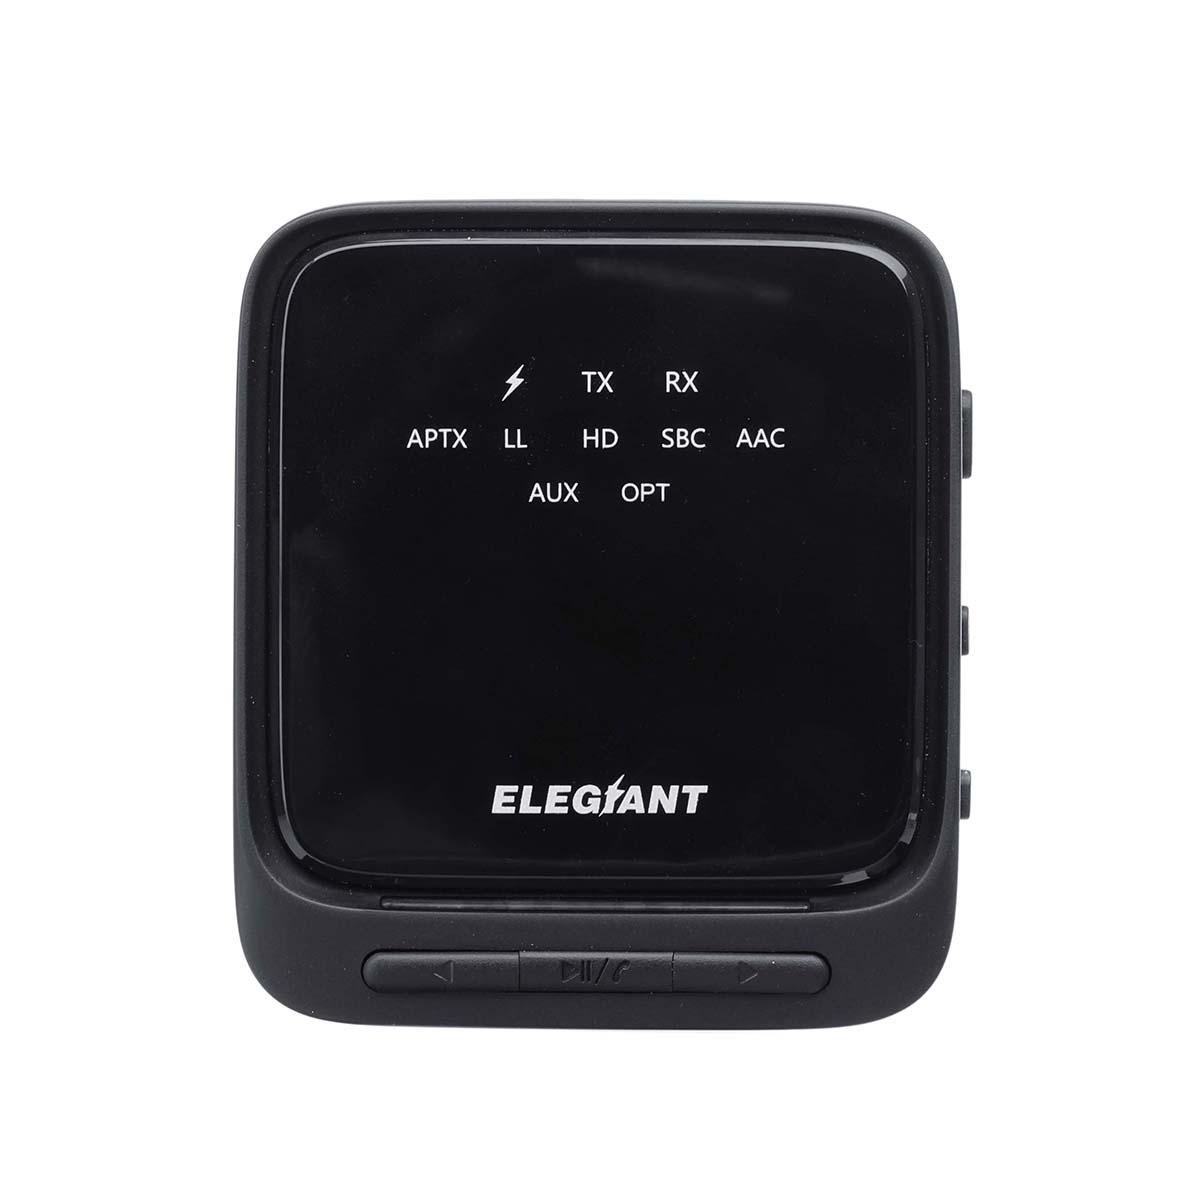 ELEGIANT bluetooth5.0 Transmitter Receiver Wireless Audio Adapter Converter HD LL for TV Car Laptop Stereo Headphone Speaker